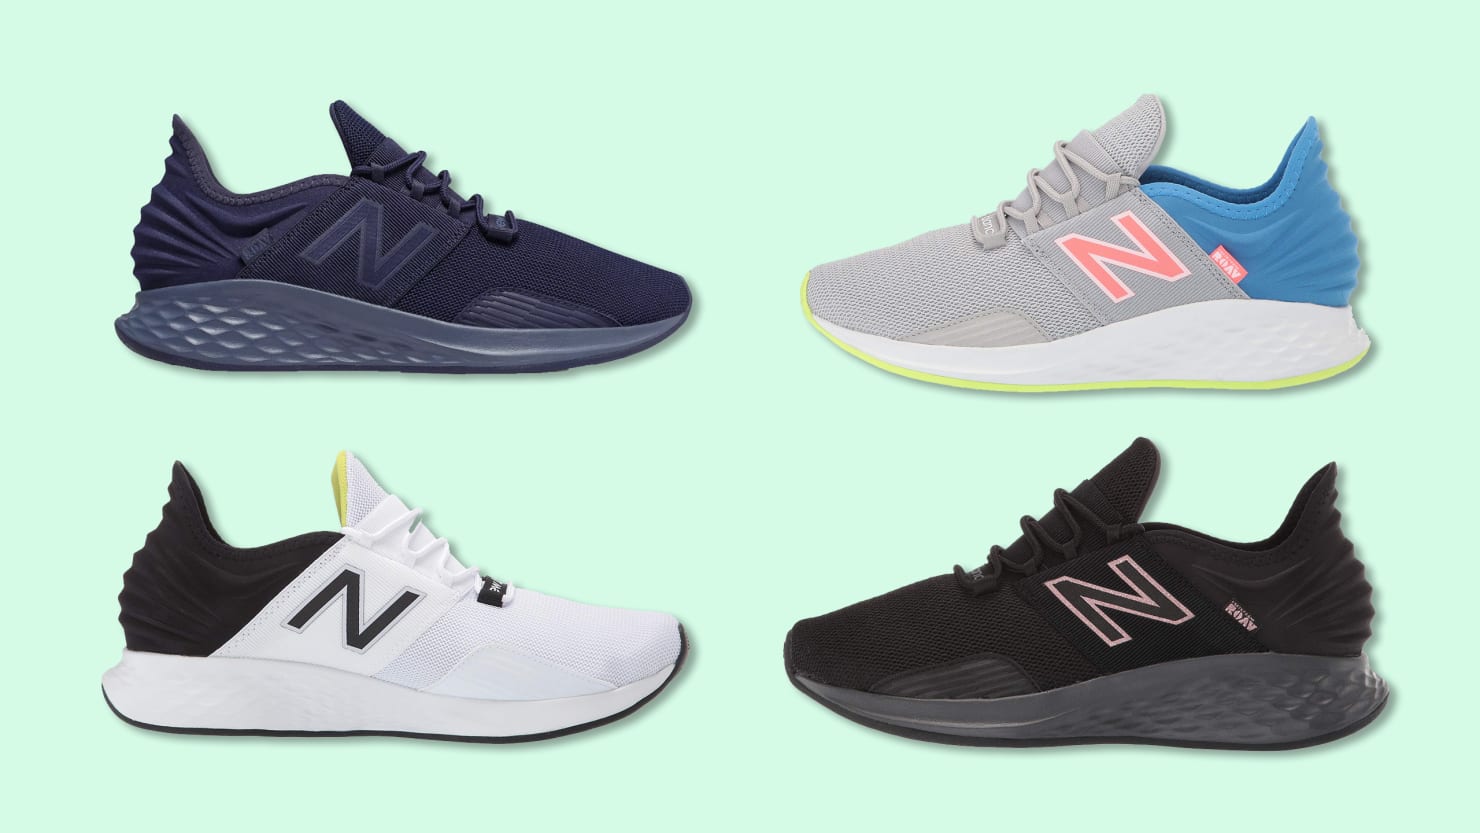 New Balanceâs New Fresh Foam ROAV Shoes Are Your Everyday Running Sneaker